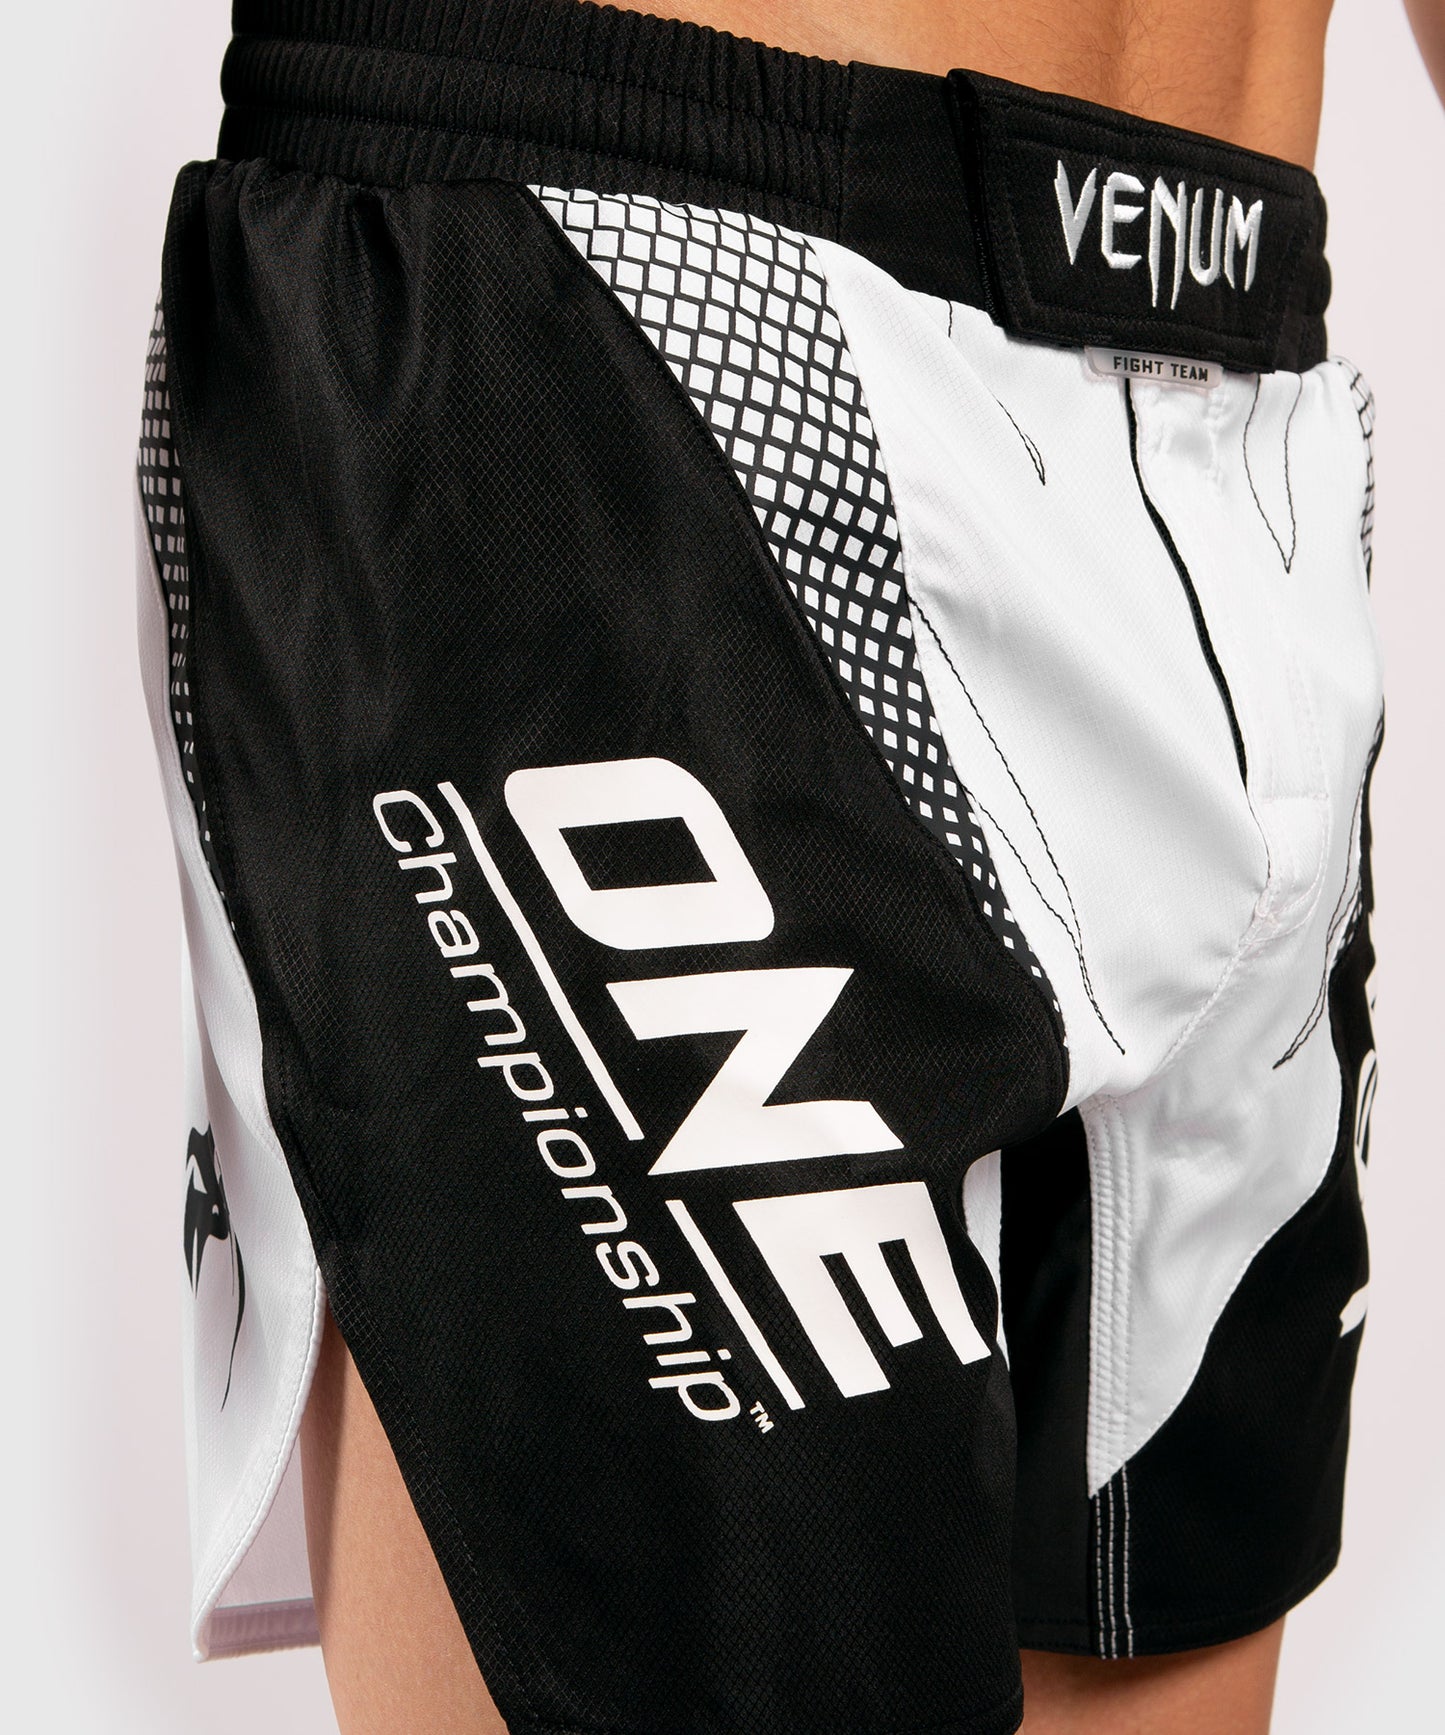 Venum x ONE FC Fightshorts - White/Black